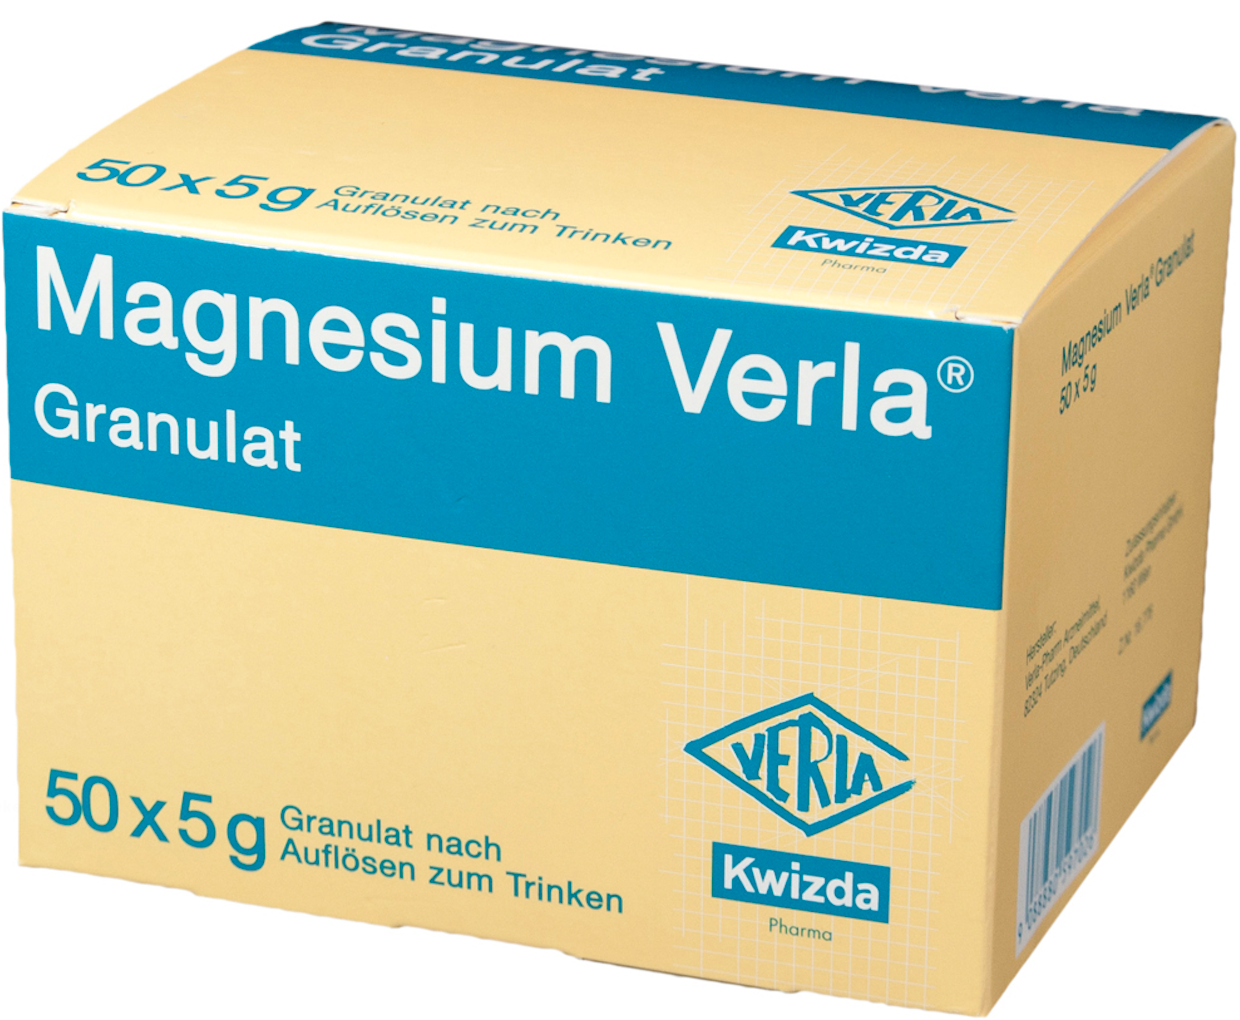 Abbildung Magnesium "Verla"  Granulat